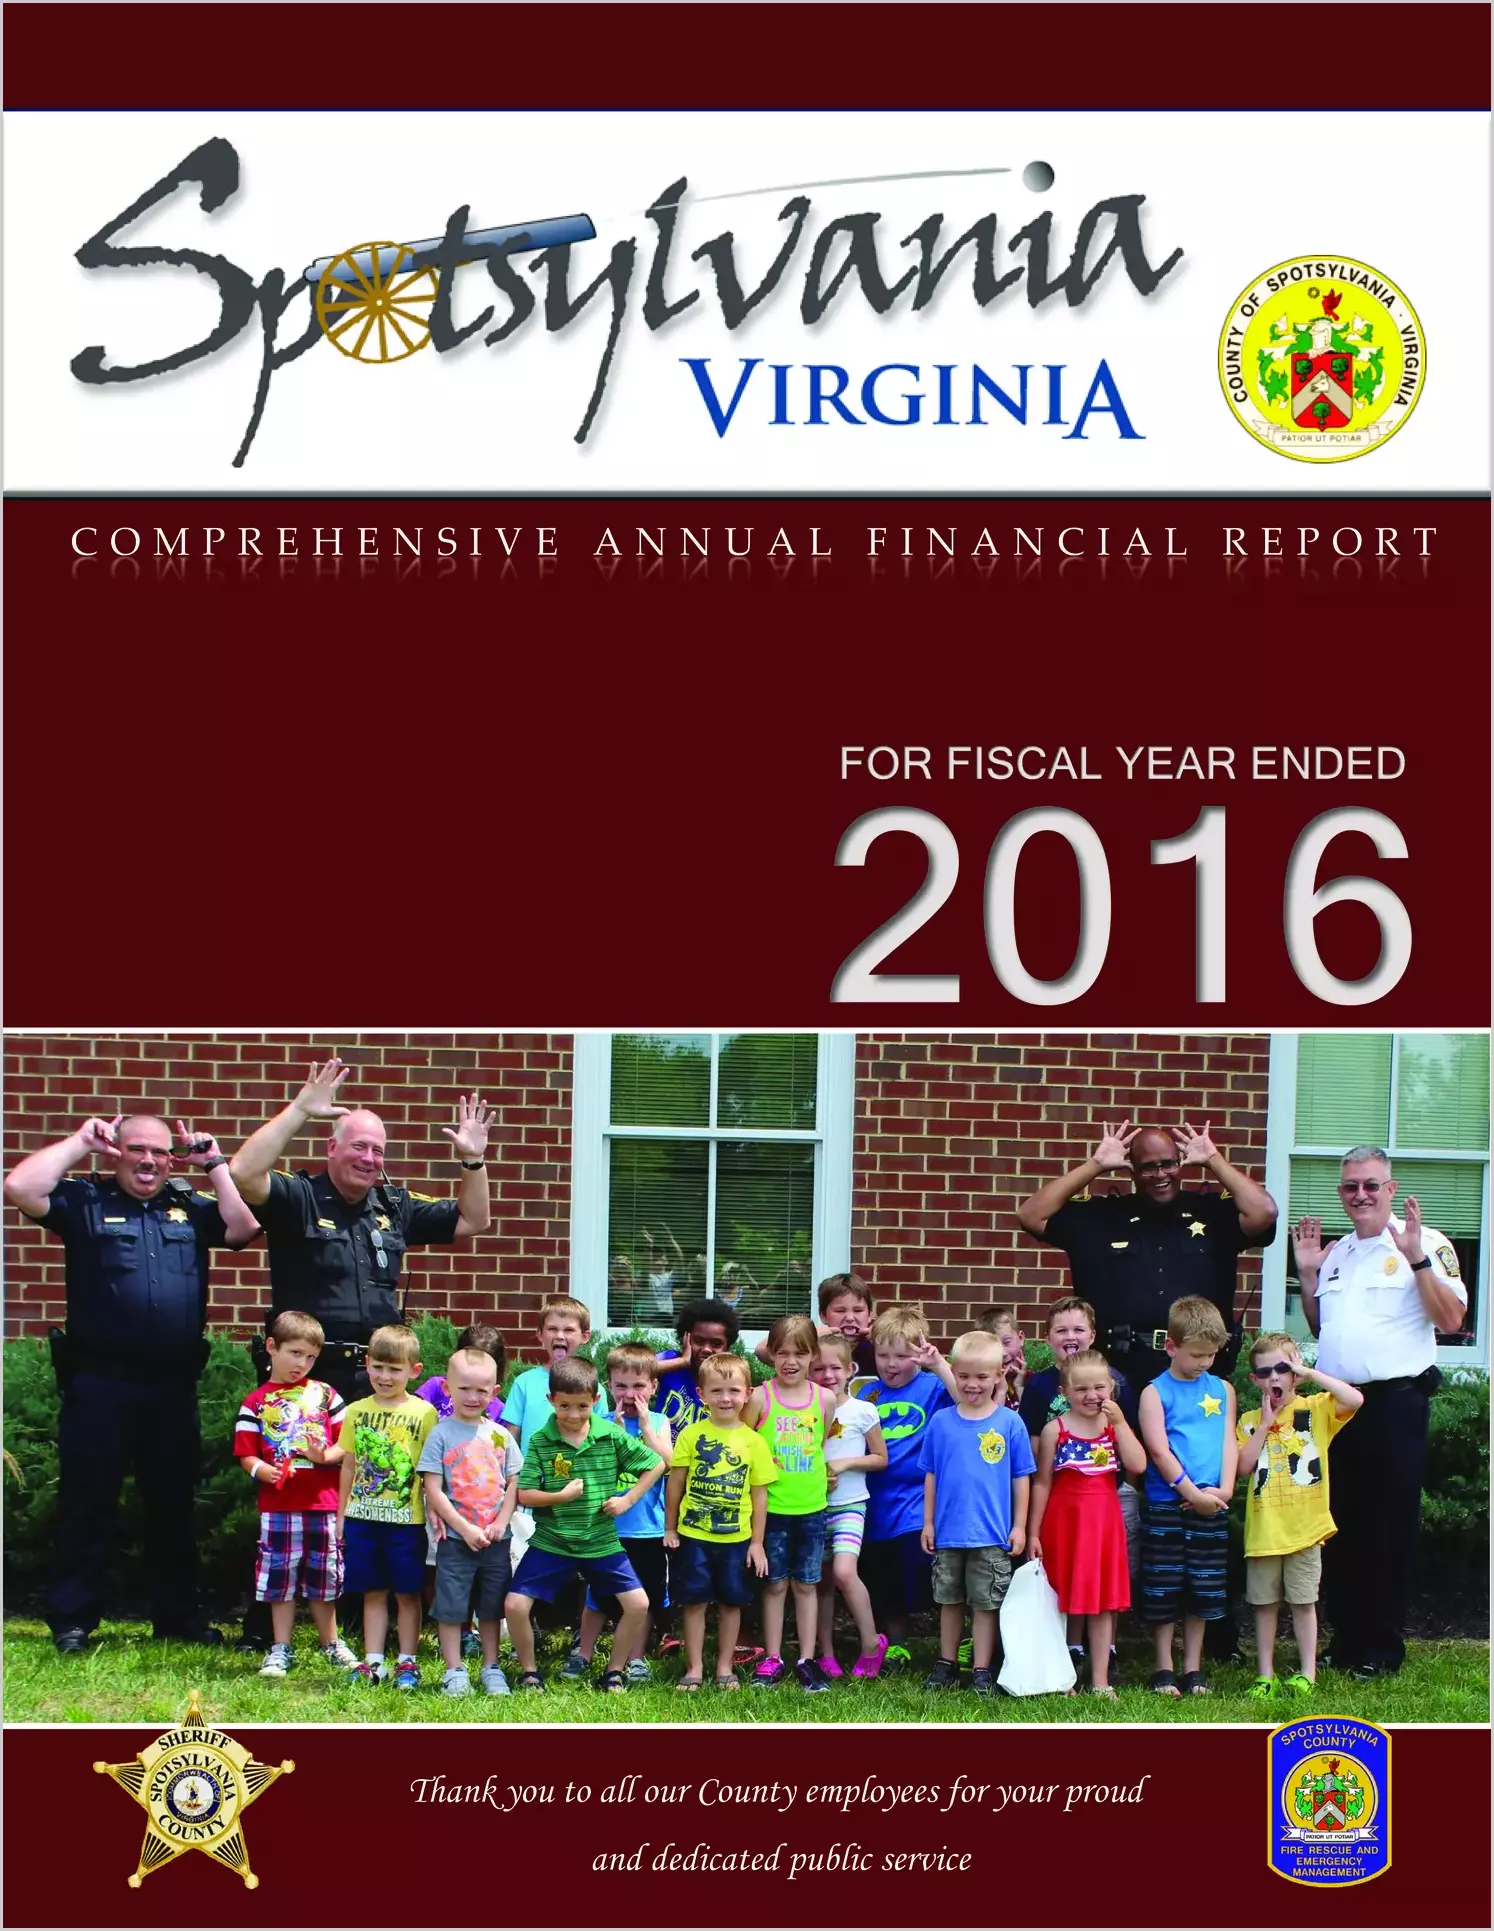 2016 Annual Financial Report for County of Spotsylvania